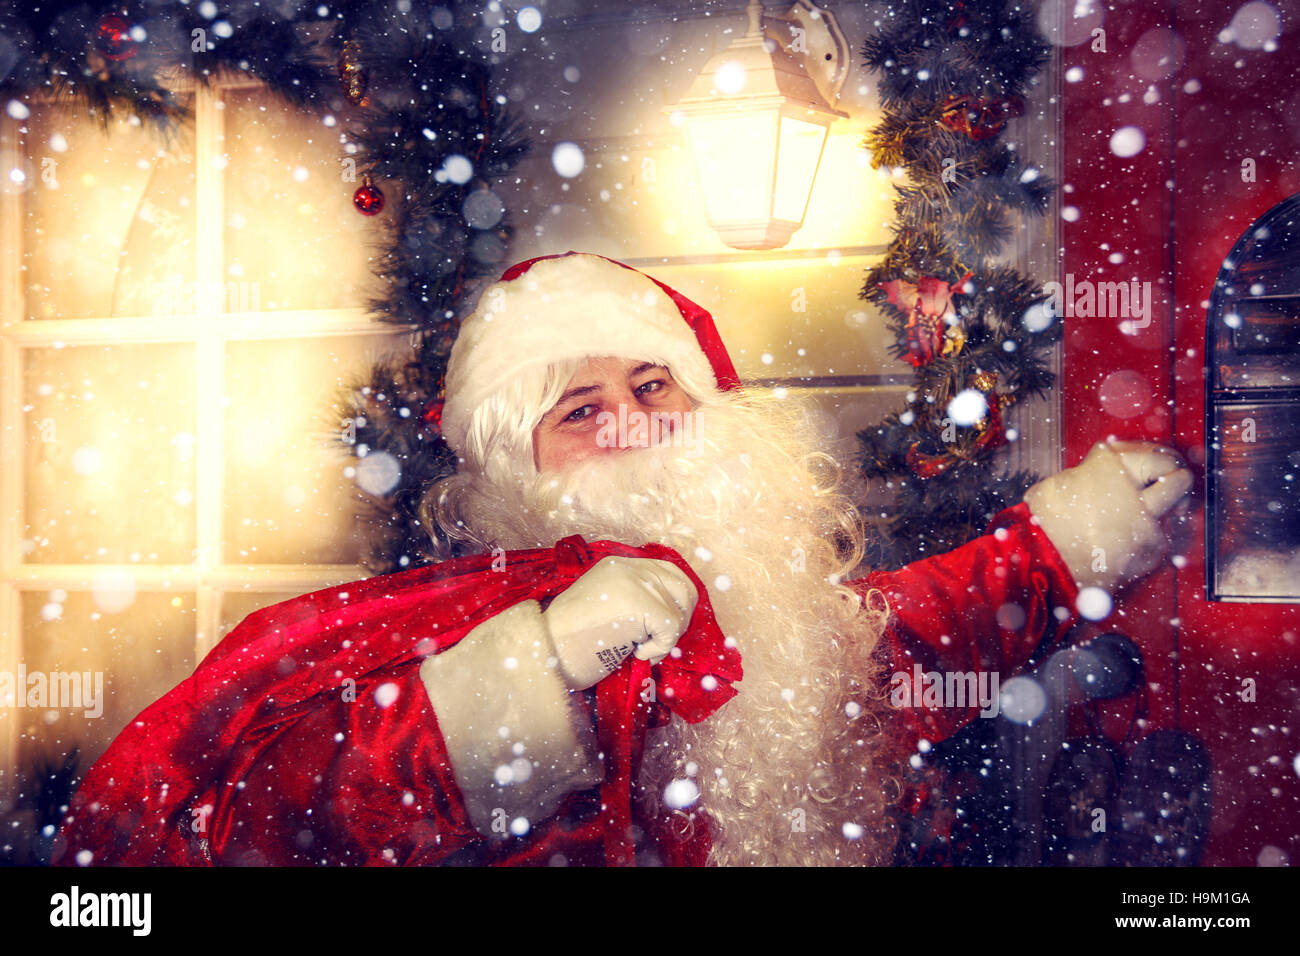 The real Santa Claus. Santa knocks on the door. Christmas night. Stock Photo